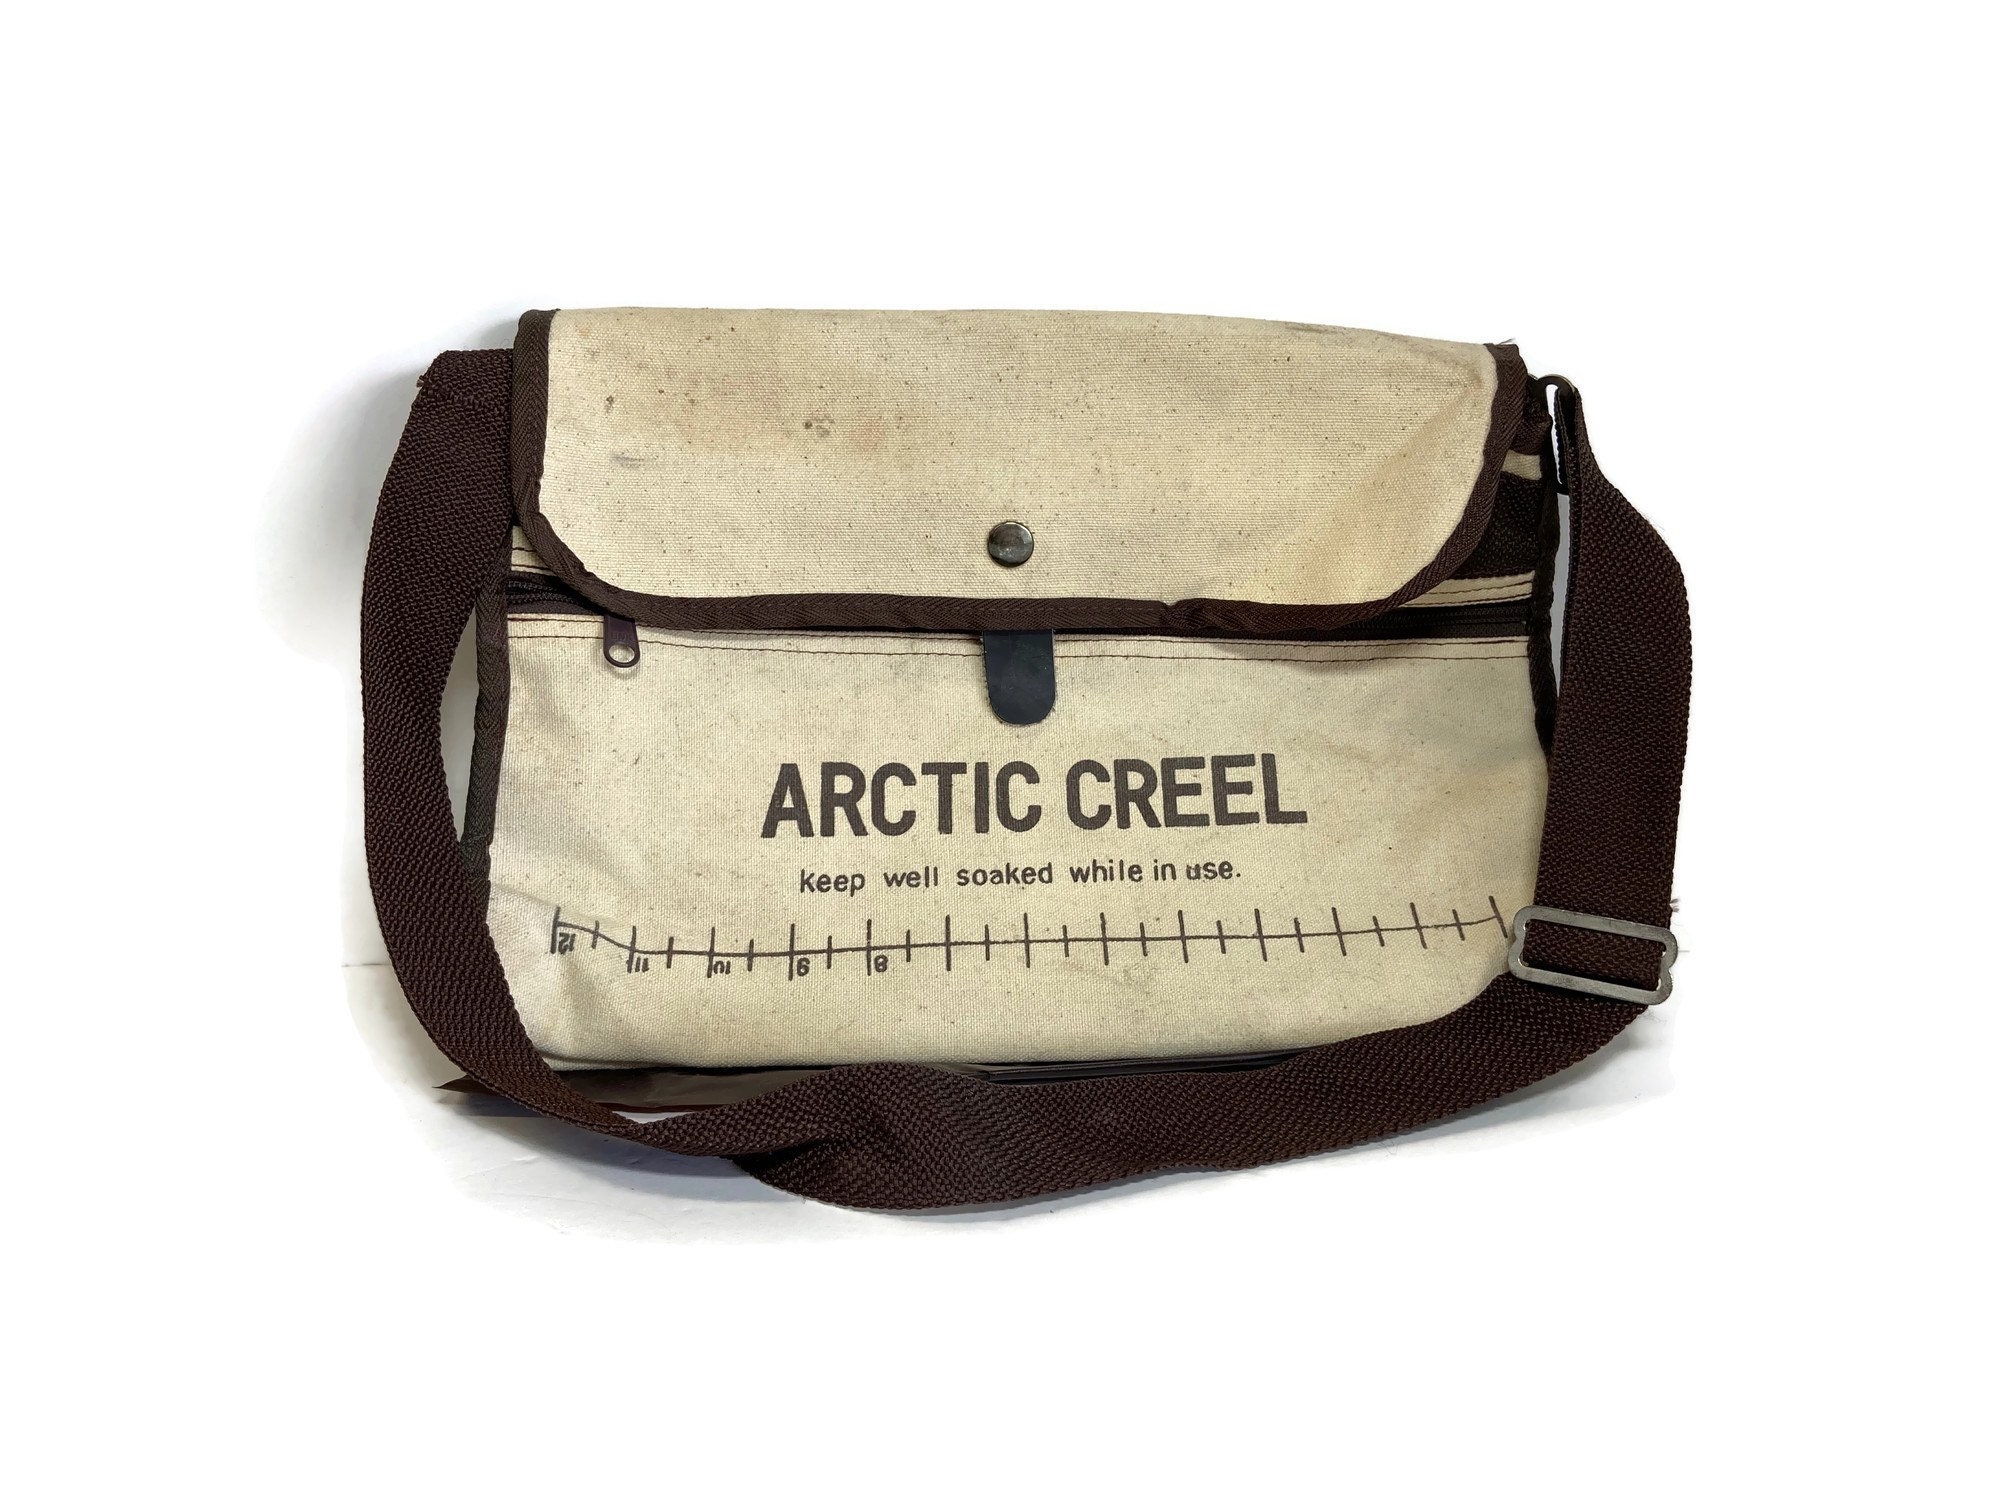 Vintage Arctic Creel Fishing Bag, Canvas Shoulder Bag